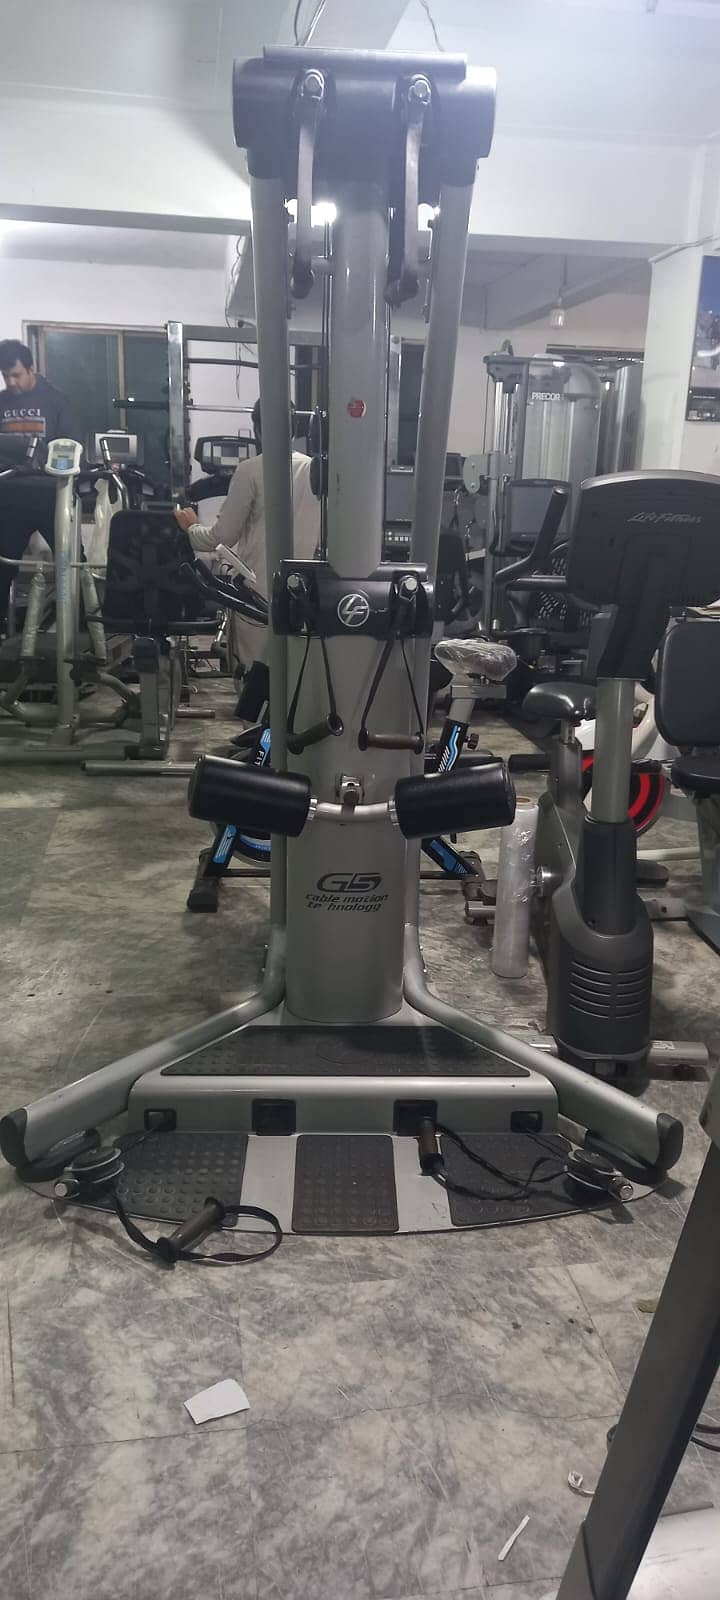 multi functional machine dumbbell gym setup treadmill elliptical plate 16